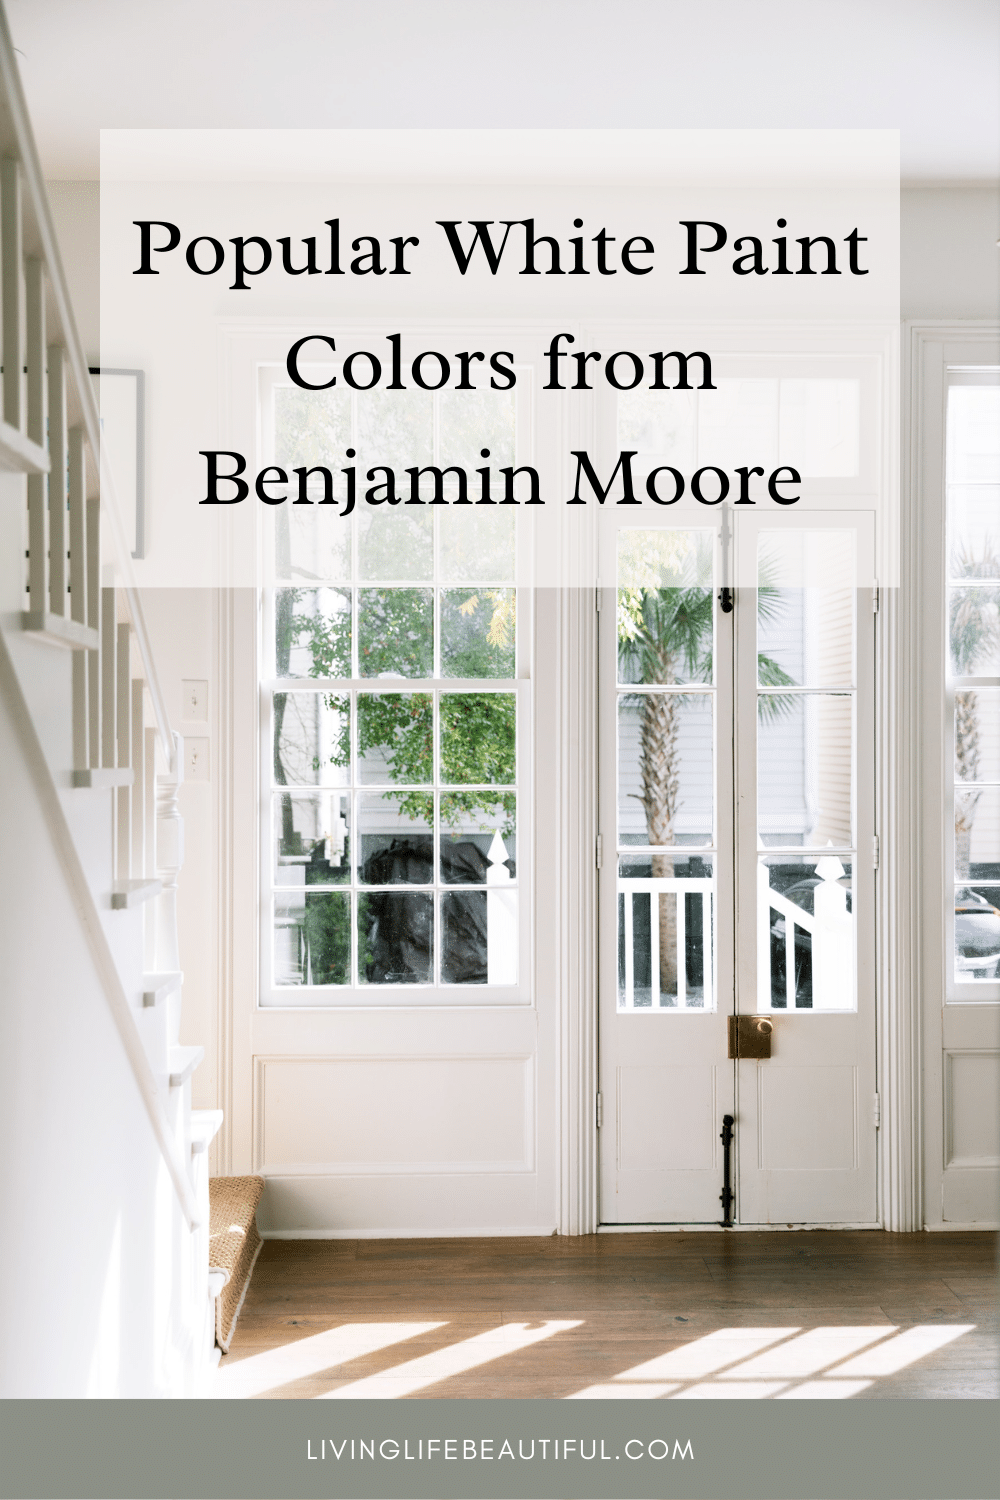 Popular White Paint Colors from Benjamin Moore - Living Life Beautiful